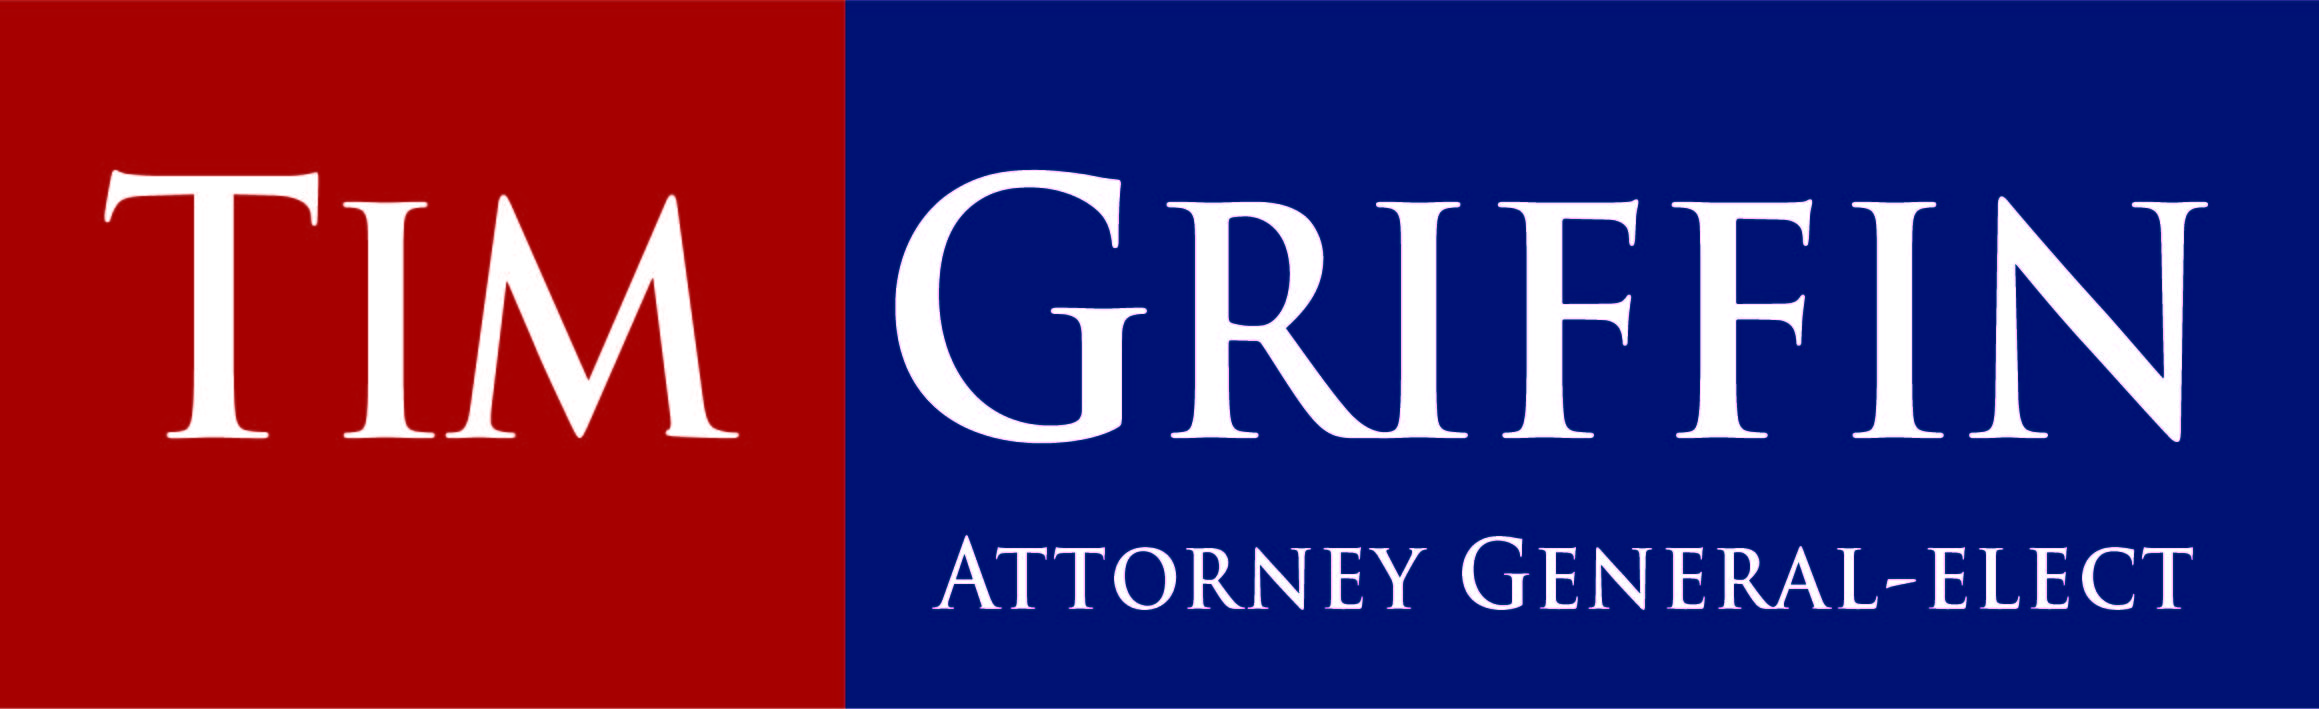 Attorney General-elect Tim Griffin